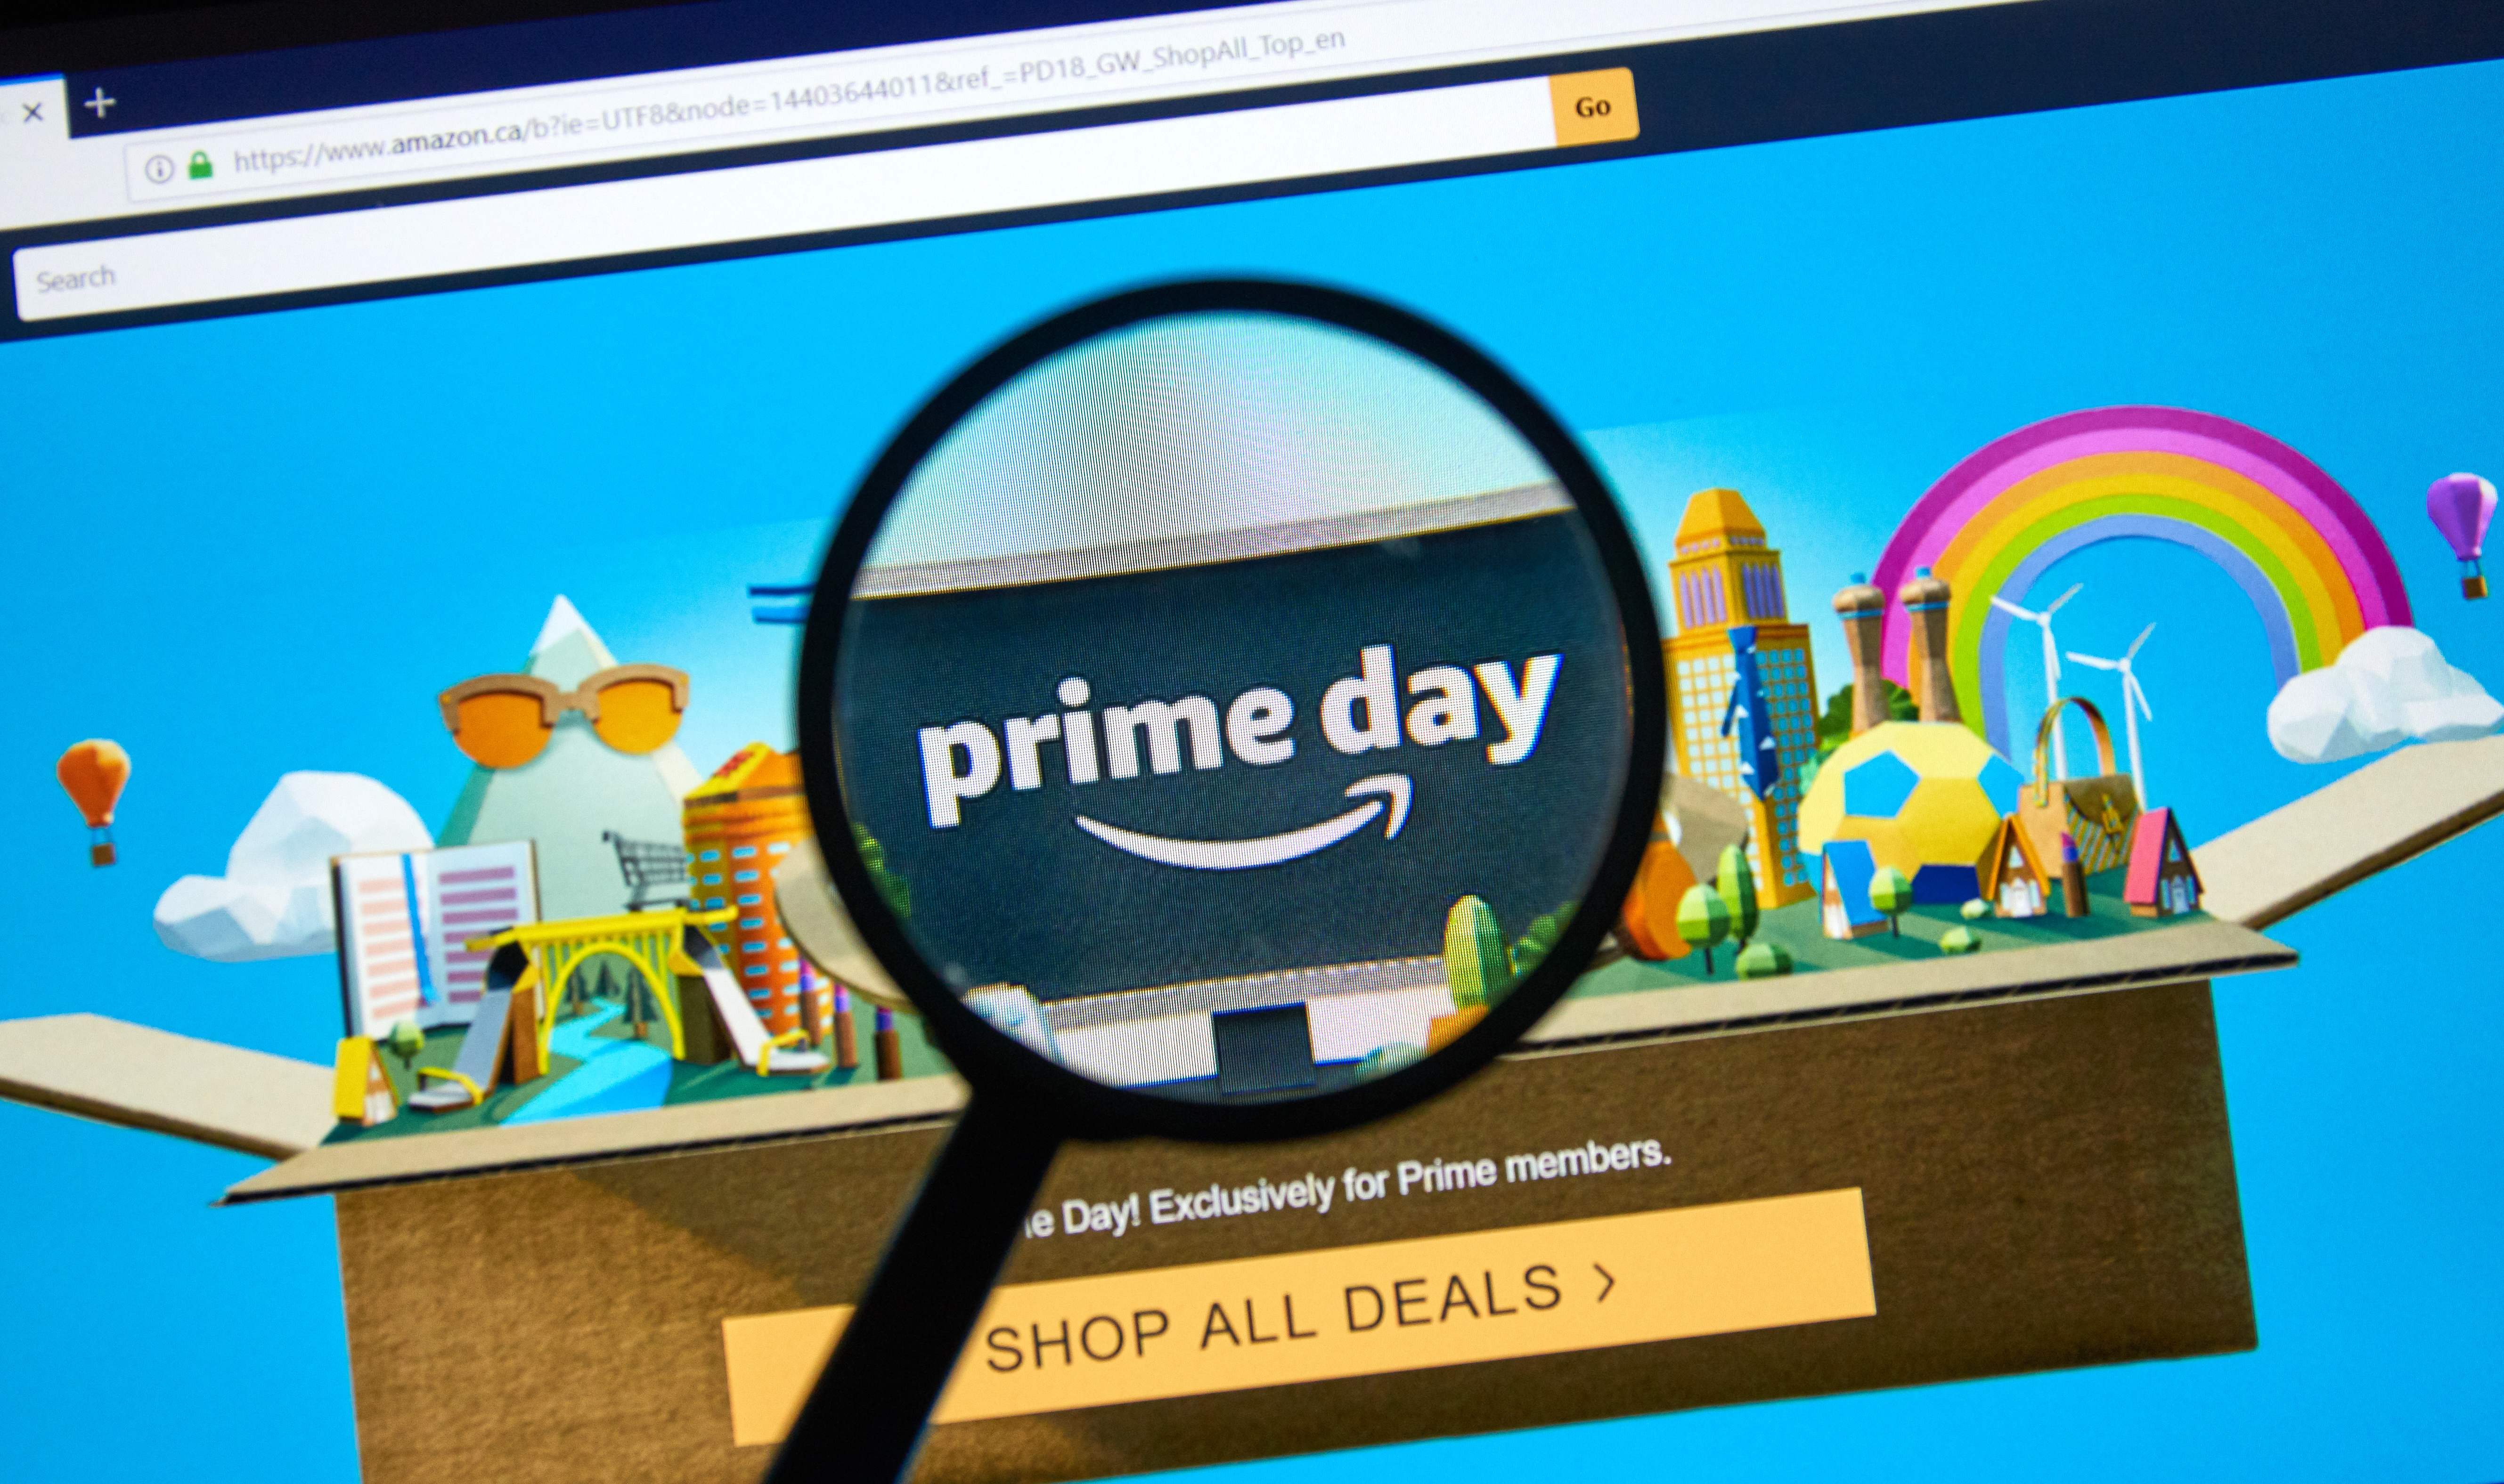 Prime Big Deal Days: Top 10 tech deals you don't want miss